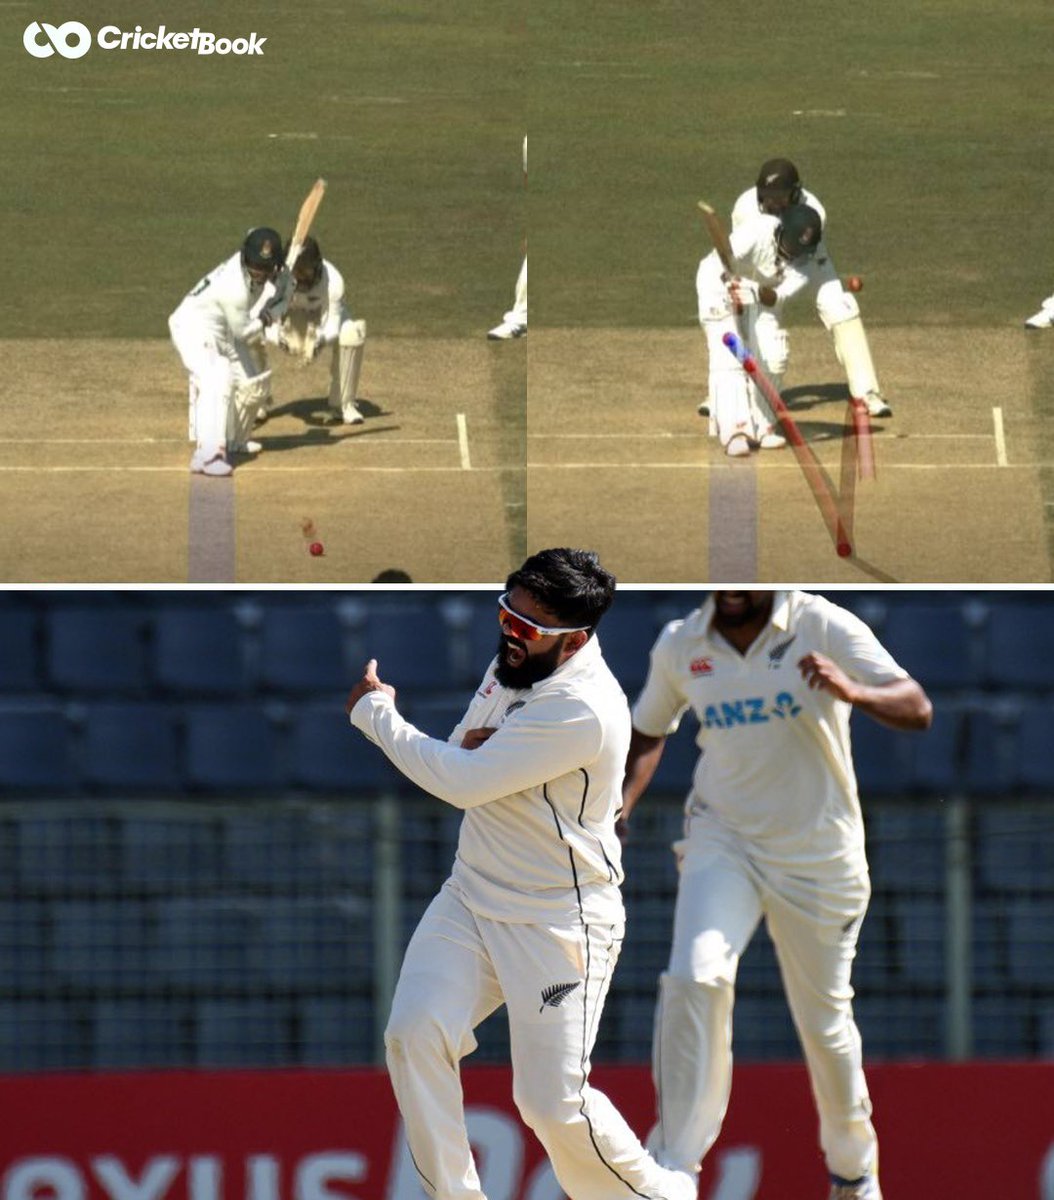 Ajaz Patel troubling Bangladesh openers!

#AjazPatel #BANvNZ #NZvBAN #Test #NewZealand #Bangaldesh #CricketBook